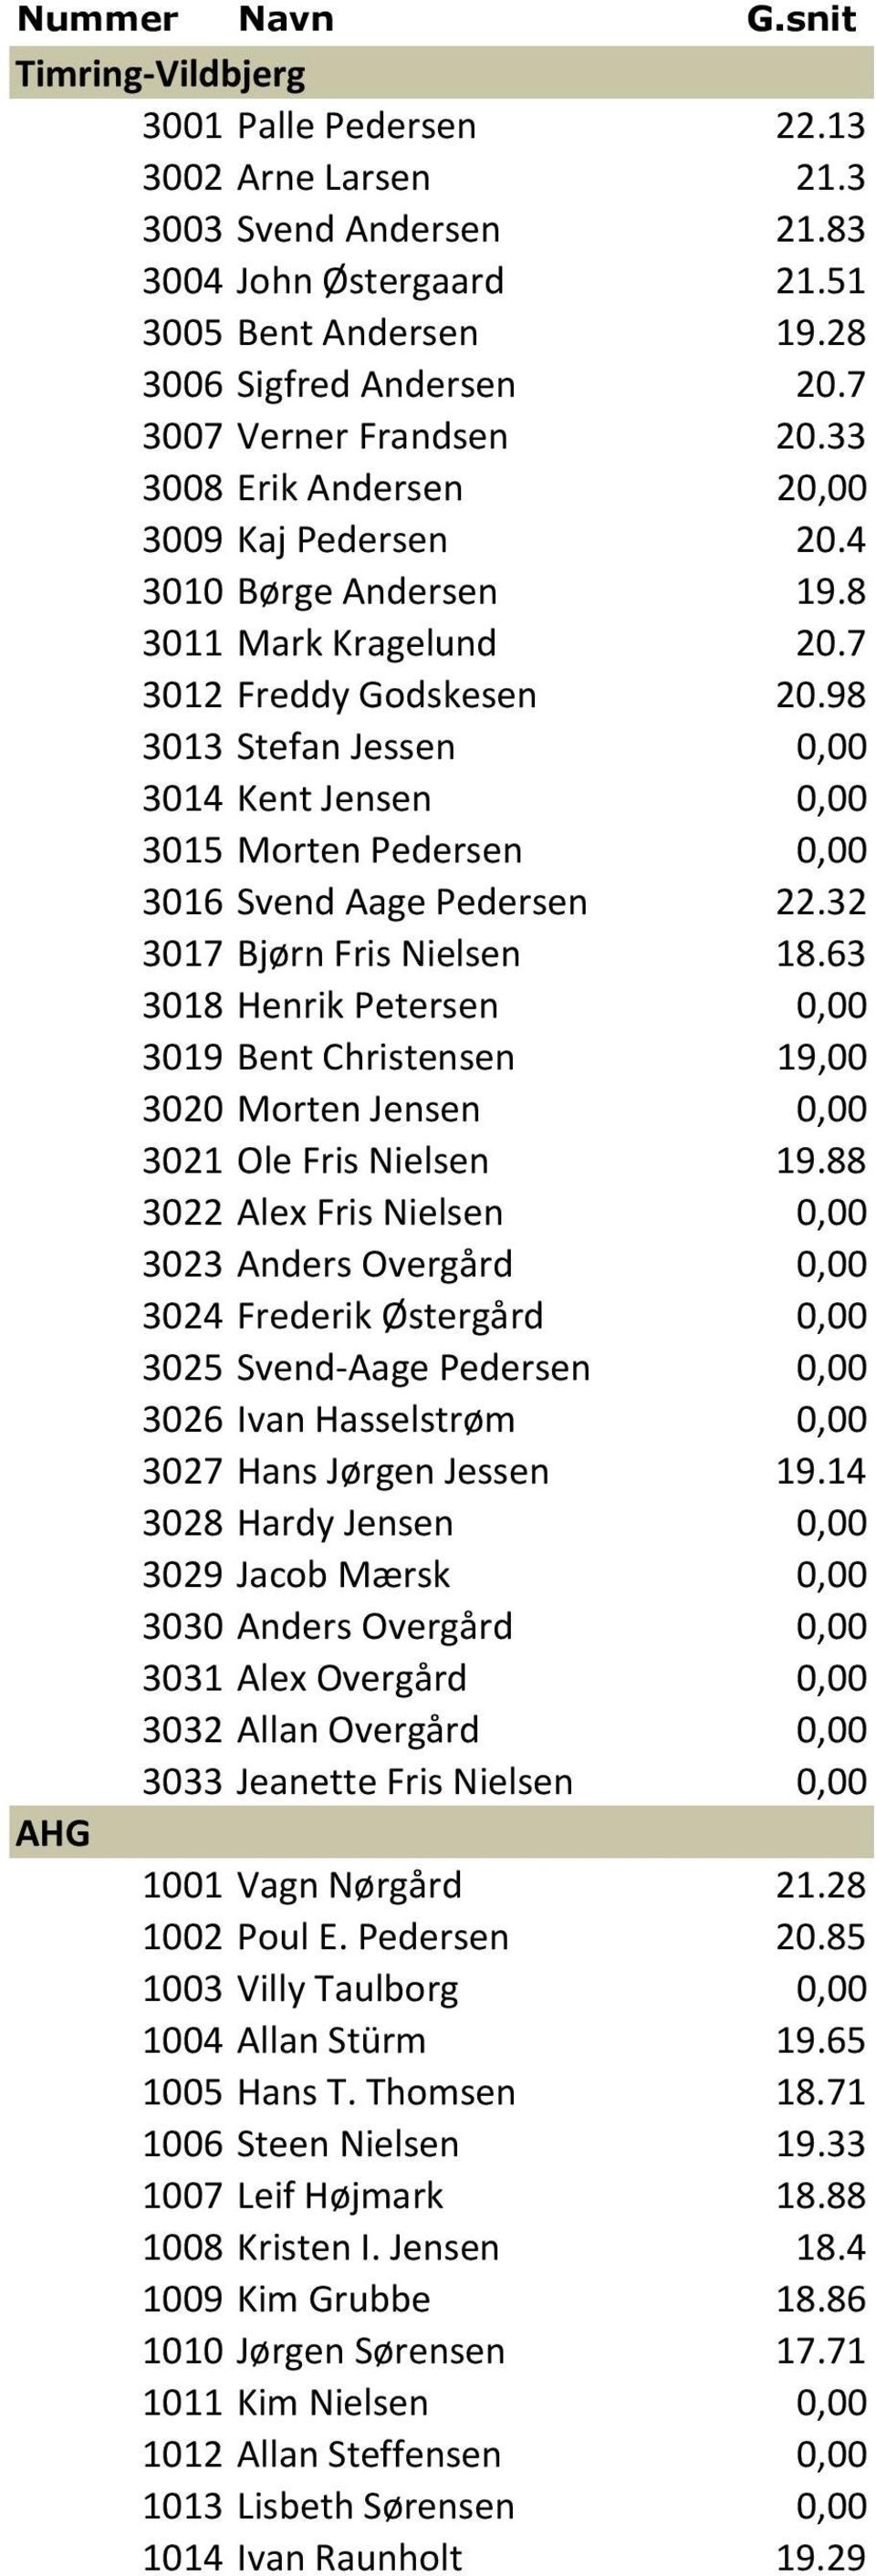 98 3013 Stefan Jessen 0,00 3014 Kent Jensen 0,00 3015 Morten Pedersen 0,00 3016 Svend Aage Pedersen 22.32 3017 Bjørn Fris Nielsen 18.